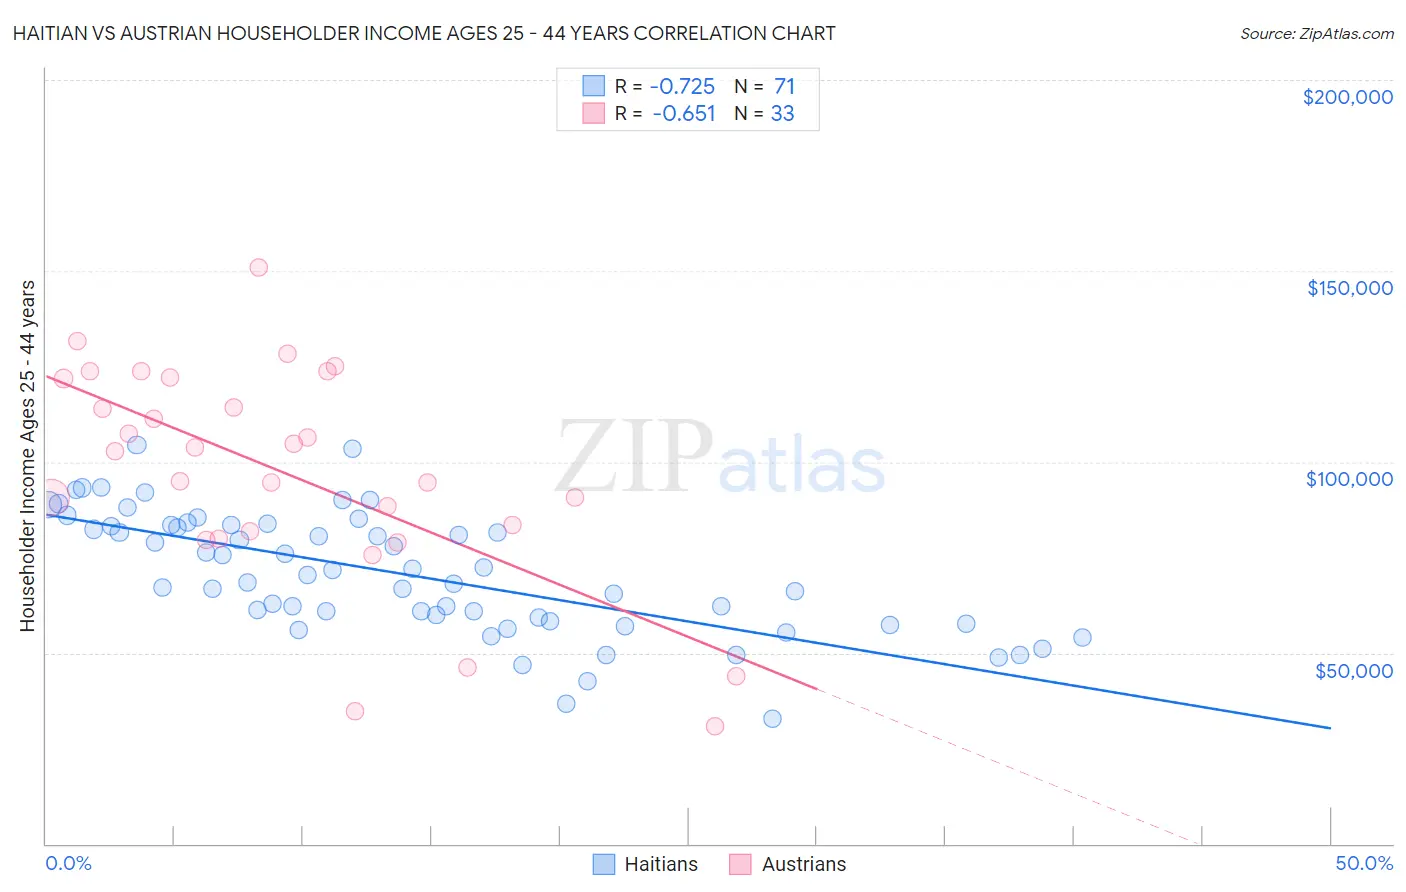 Haitian vs Austrian Householder Income Ages 25 - 44 years